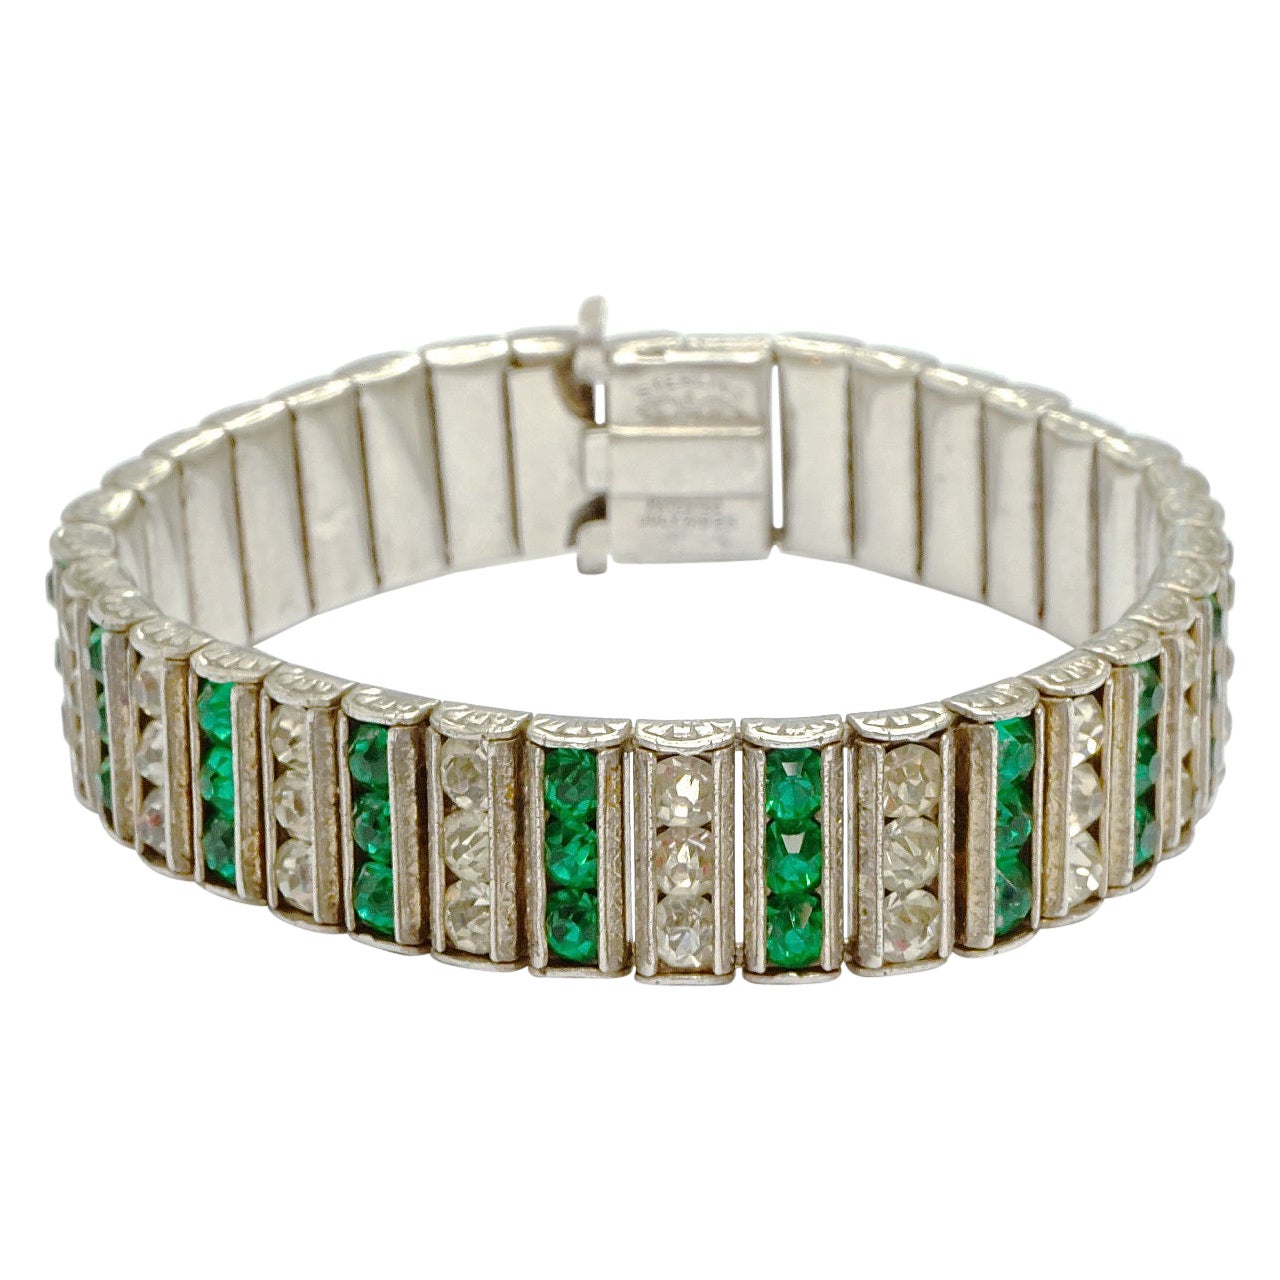 Leach & Miller Art Deco Sterling Silver Bracelet Green Clear Paste Stones 1920s